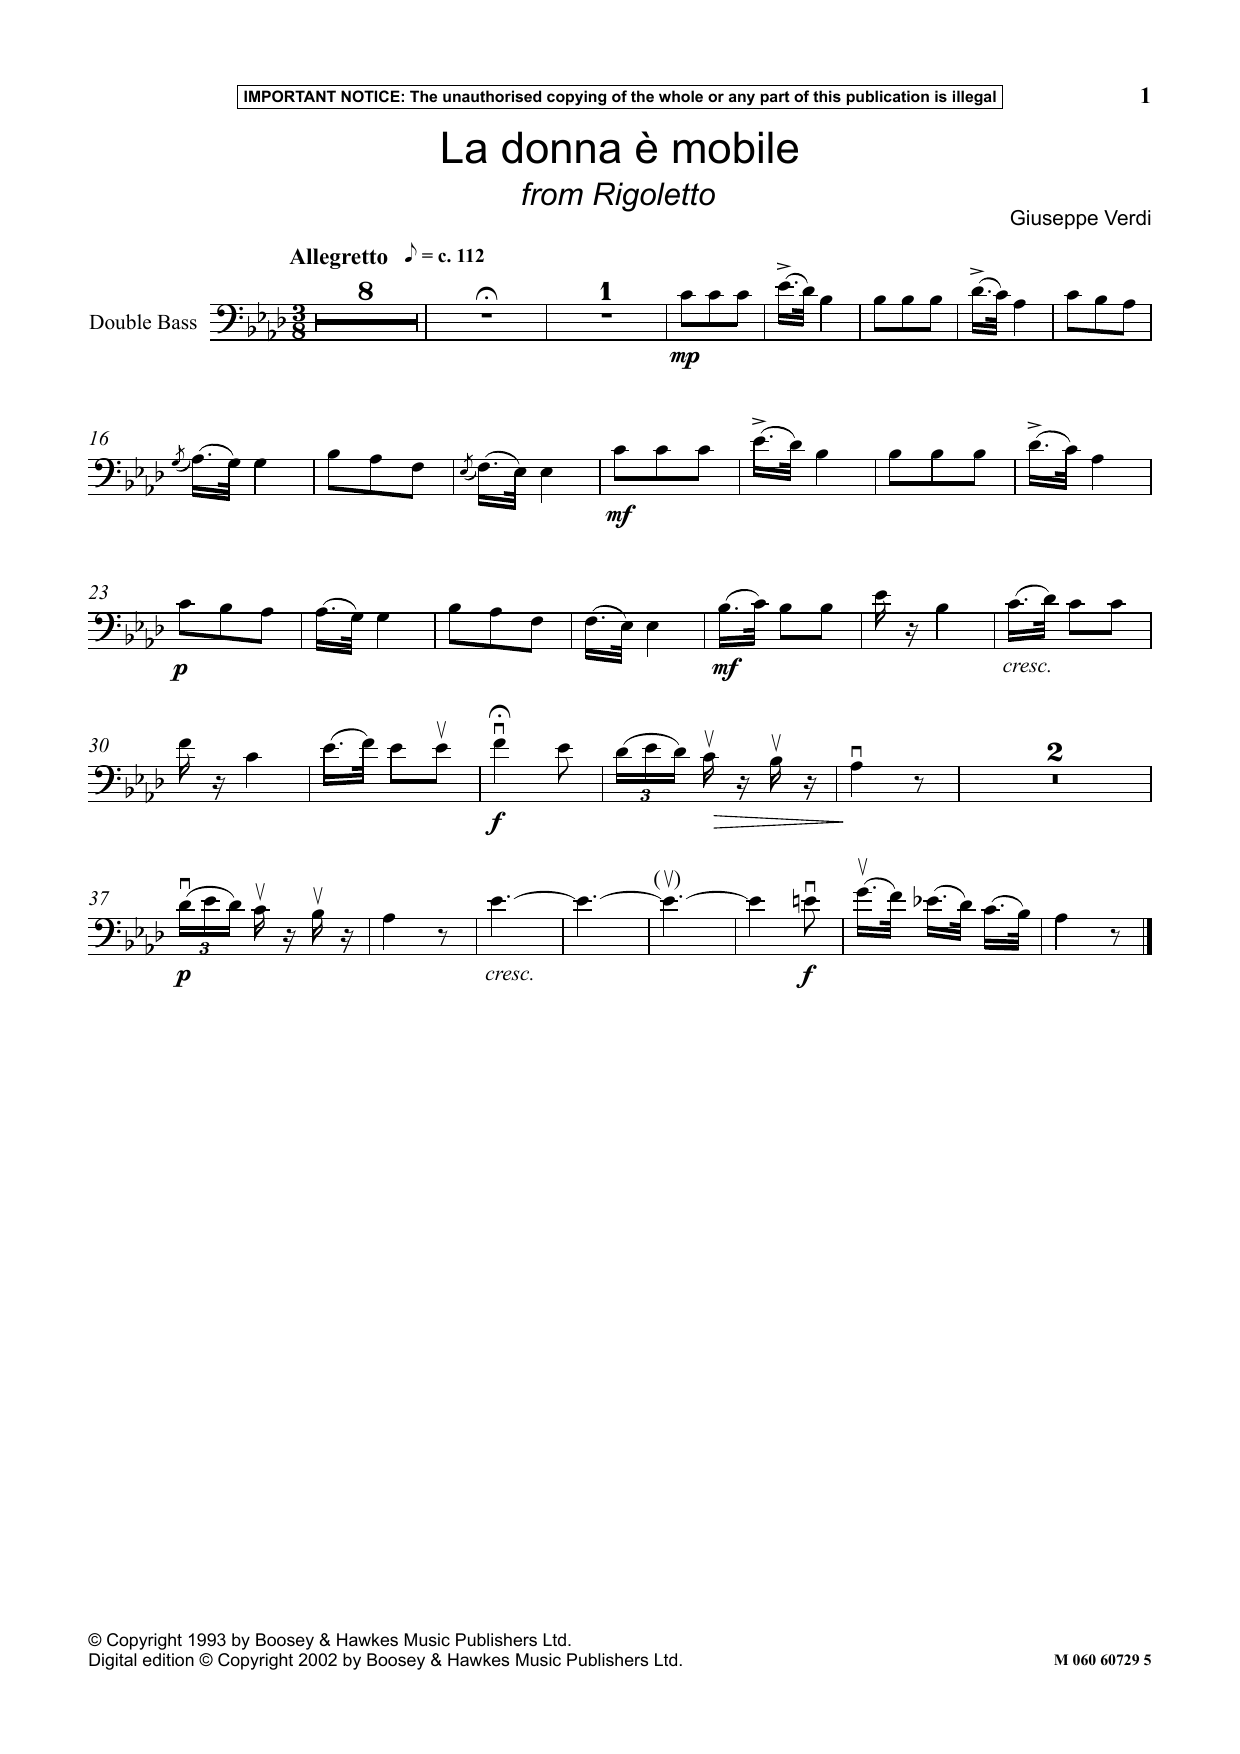 Giuseppe Verdi La Donna E Mobile (from Rigoletto) Sheet Music Notes & Chords for Instrumental Solo - Download or Print PDF